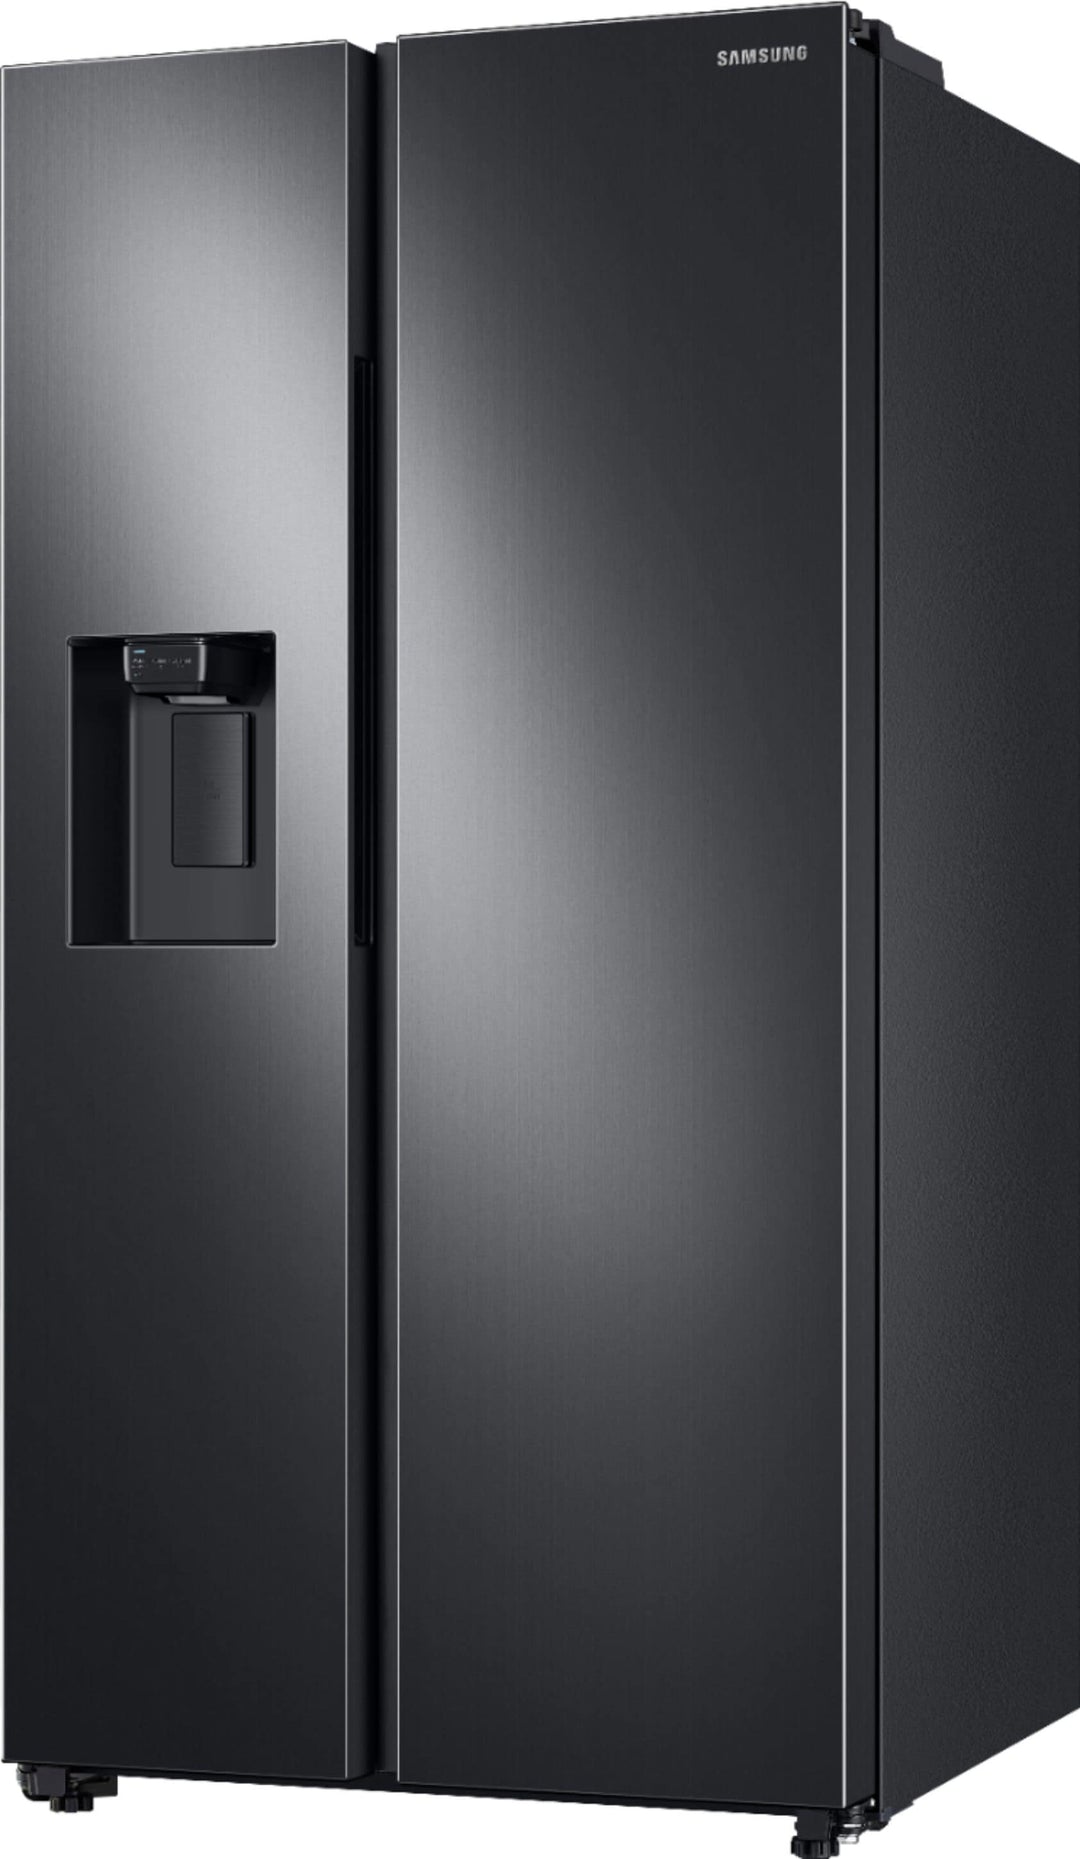 Samsung - 27.4 Cu. Ft. Side-by-Side Refrigerator - Black stainless steel_5